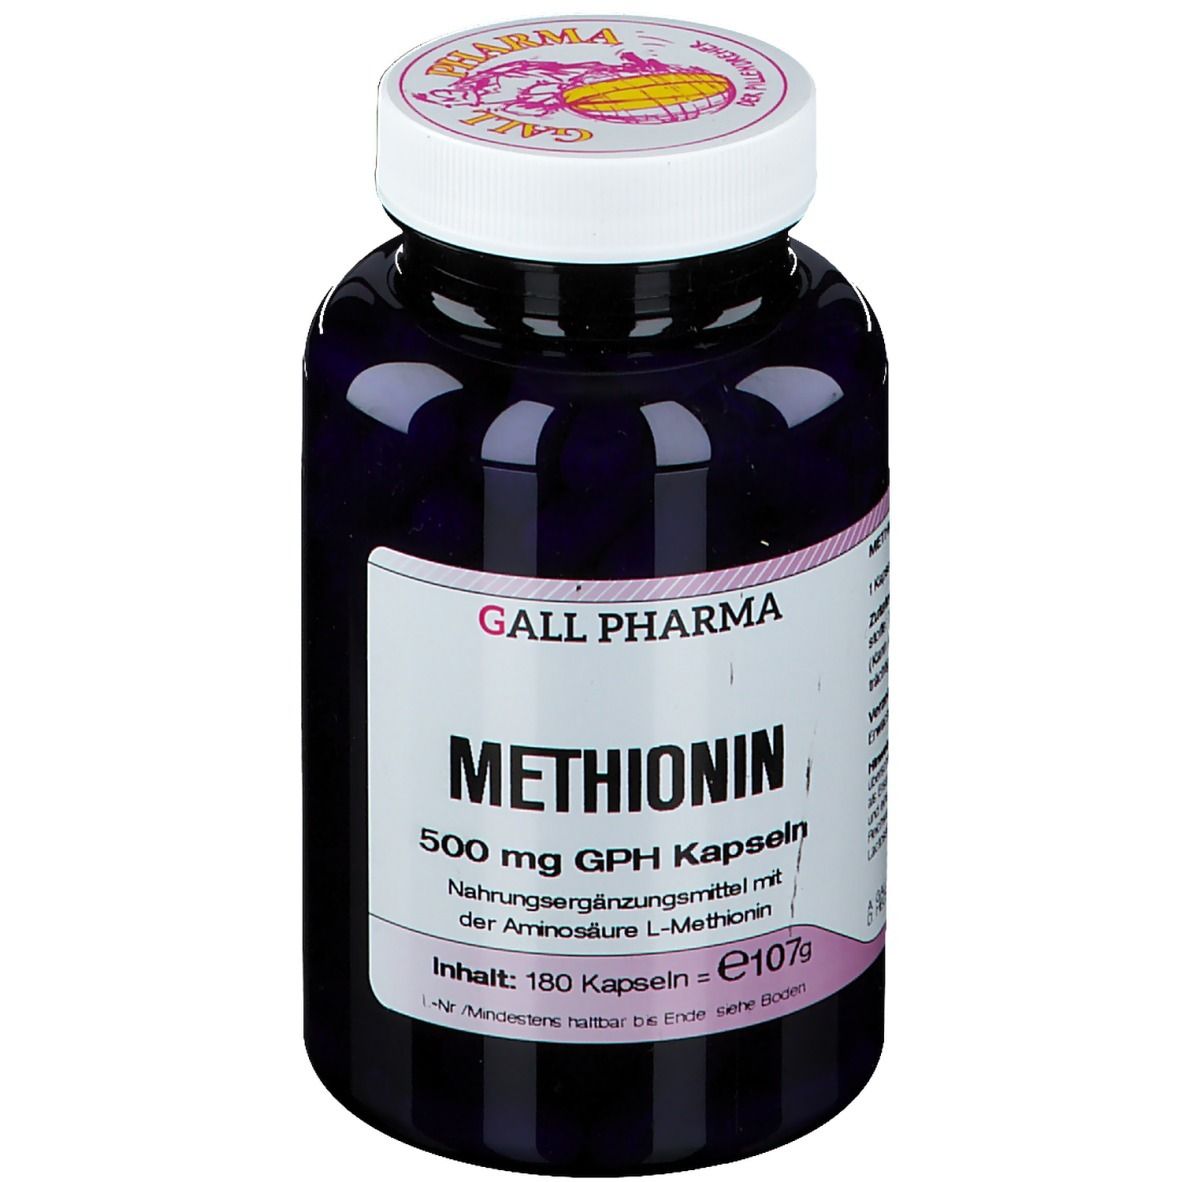 Image of GALL PHARMA L-Methionin 500 mg GPH Kapseln